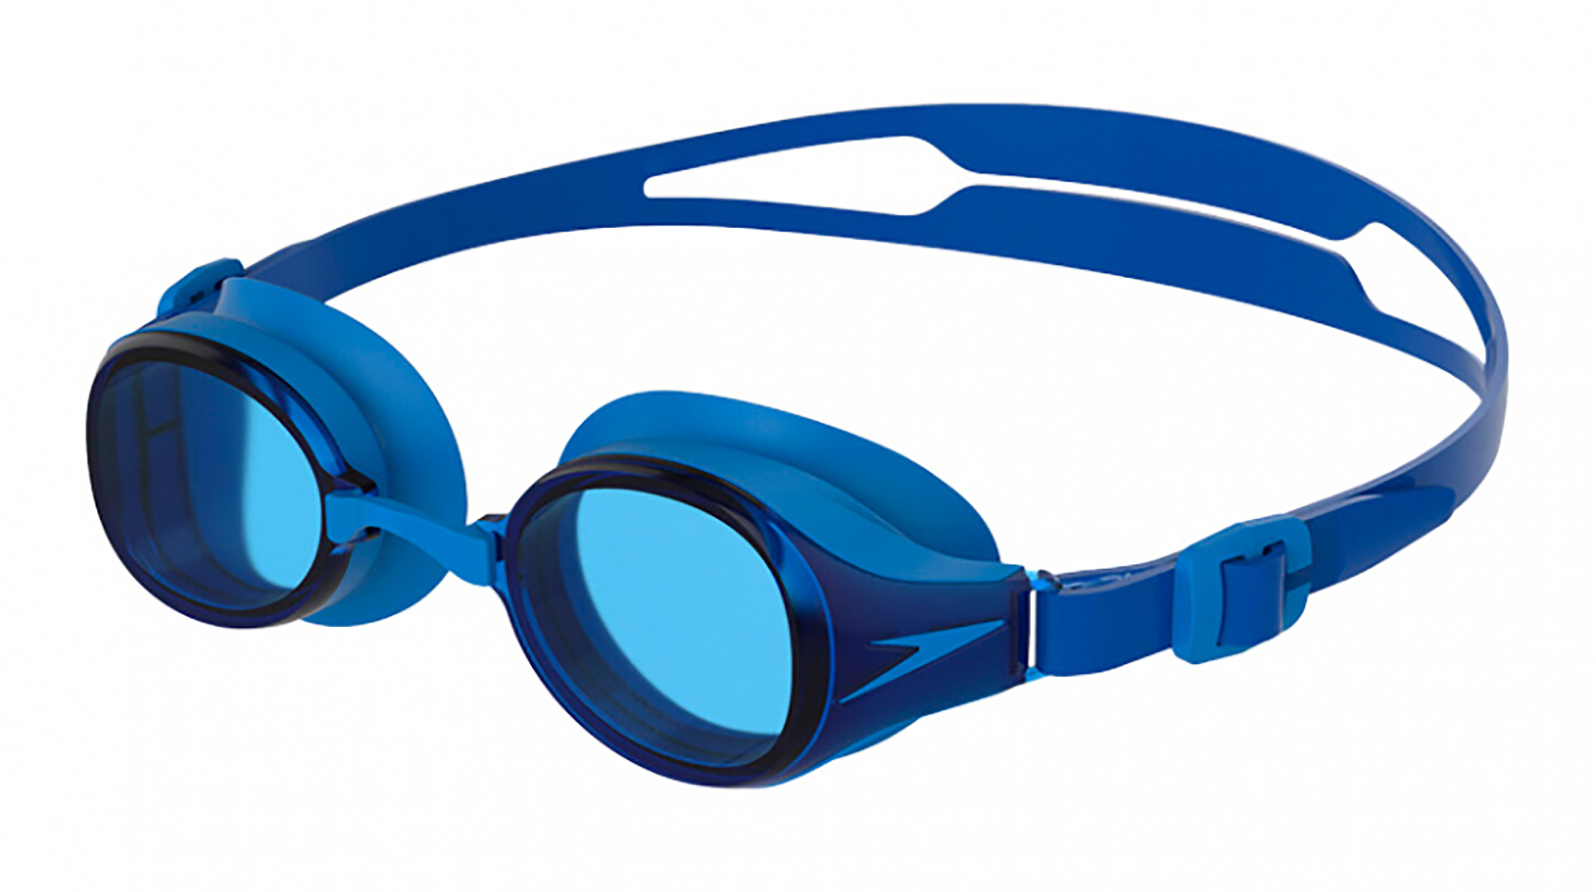 Speedo Очки для плавания Hydropure Optical F809 -2,5 speedo очки для плавания hydropure optical f809 3 5